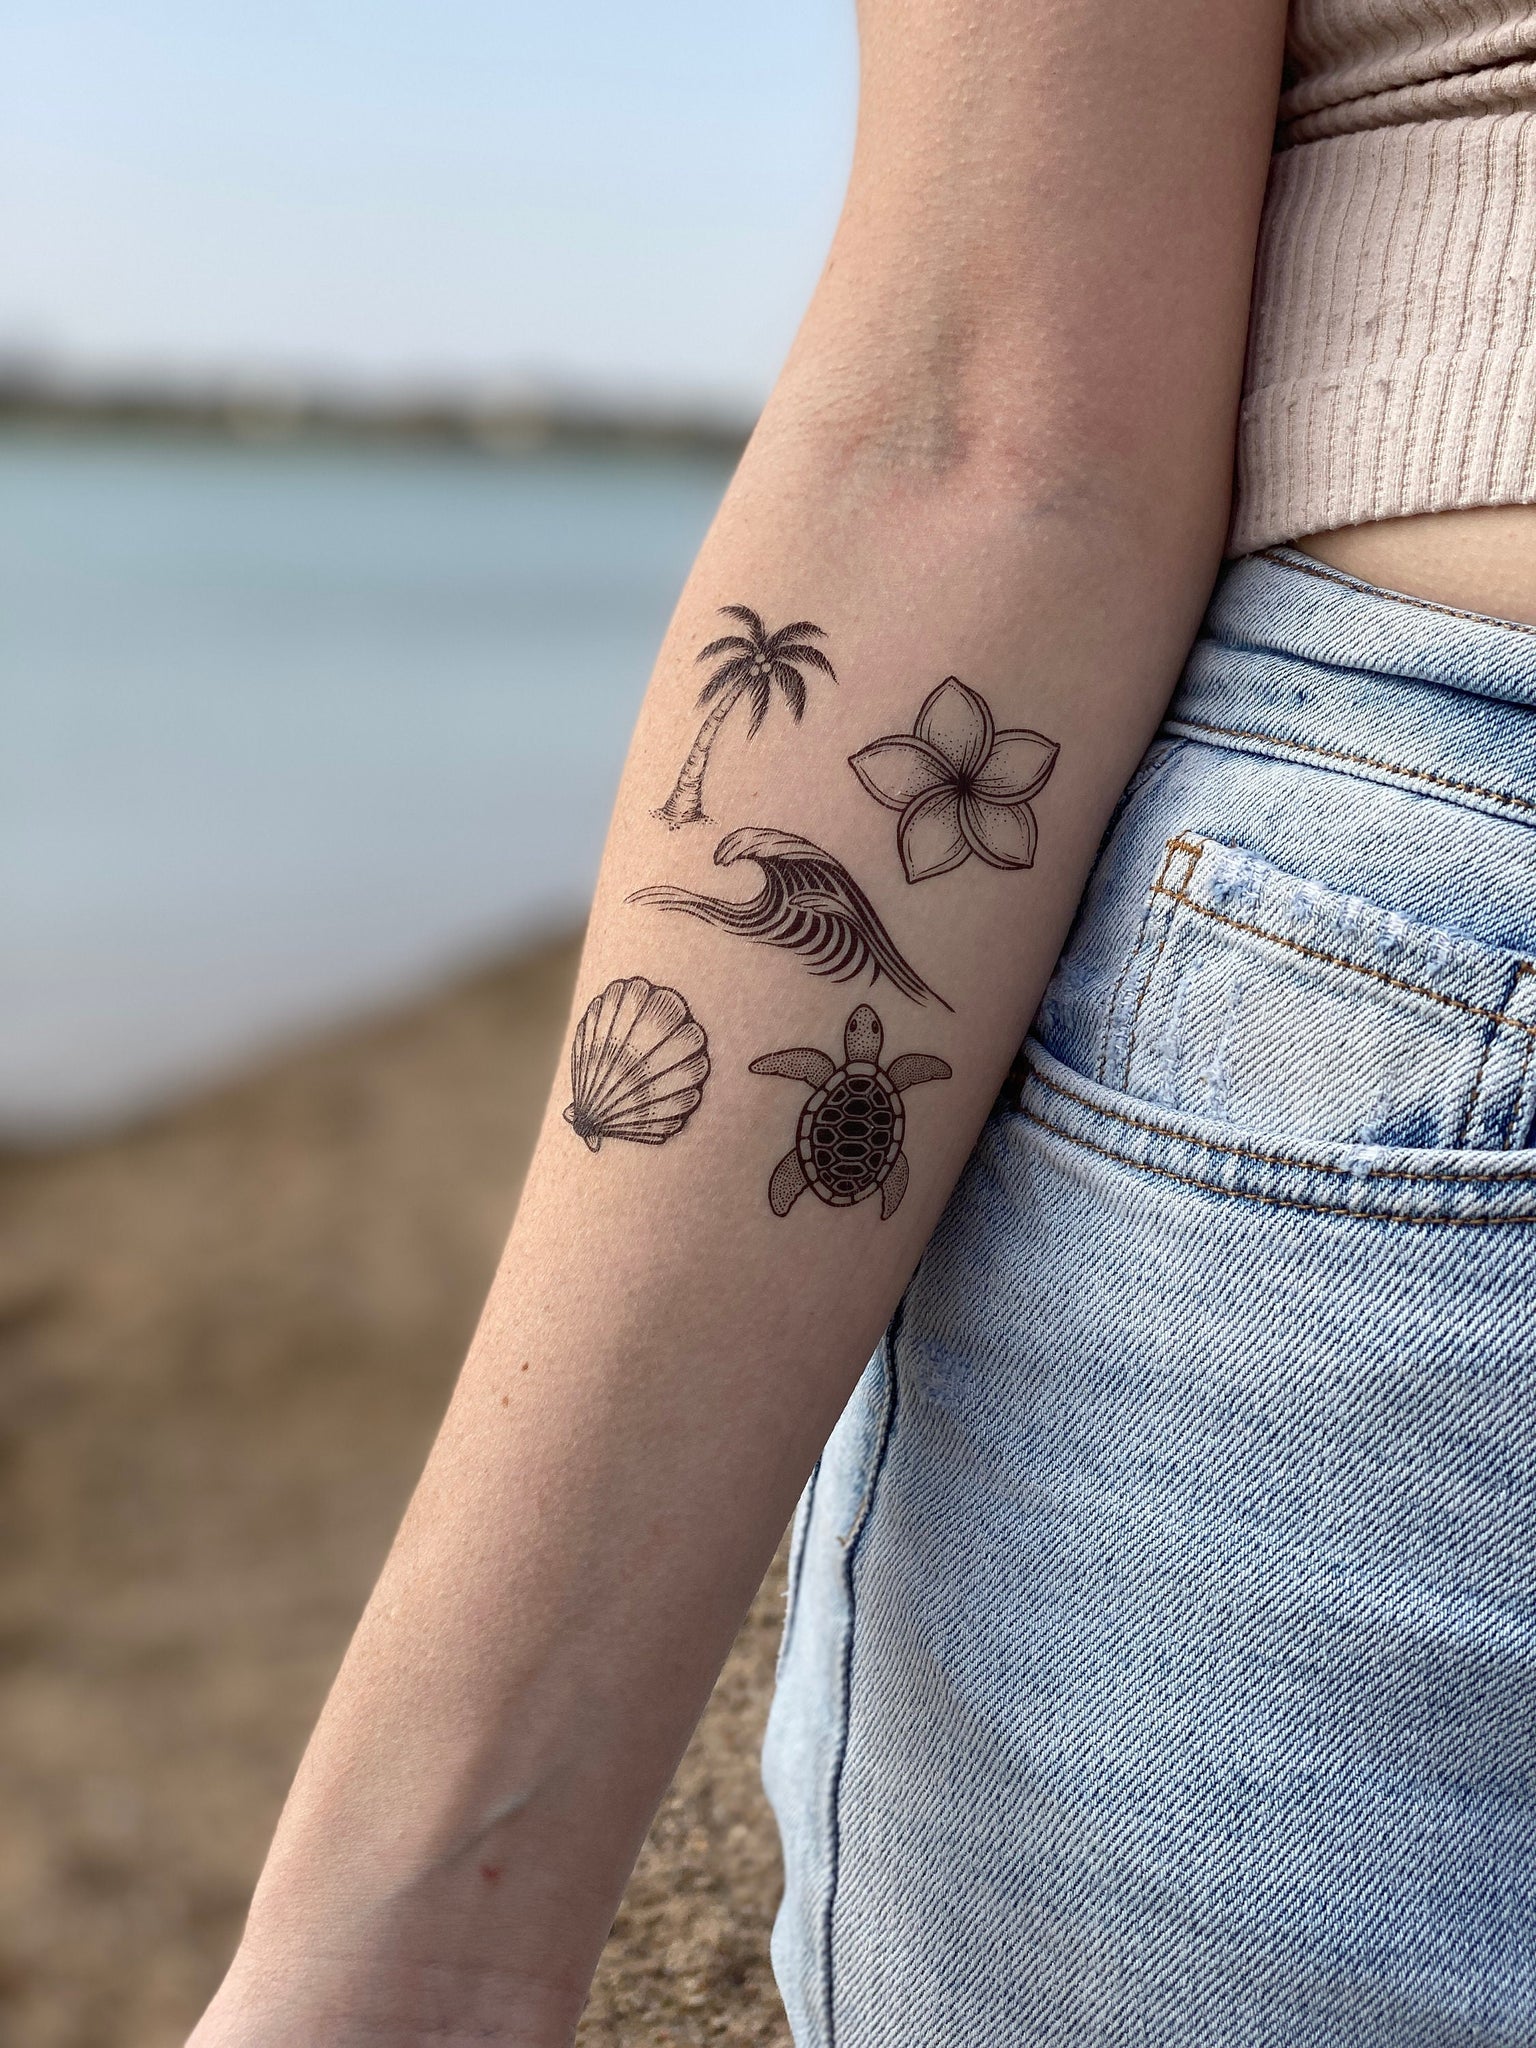 A Creative Life – Underground Tattoo